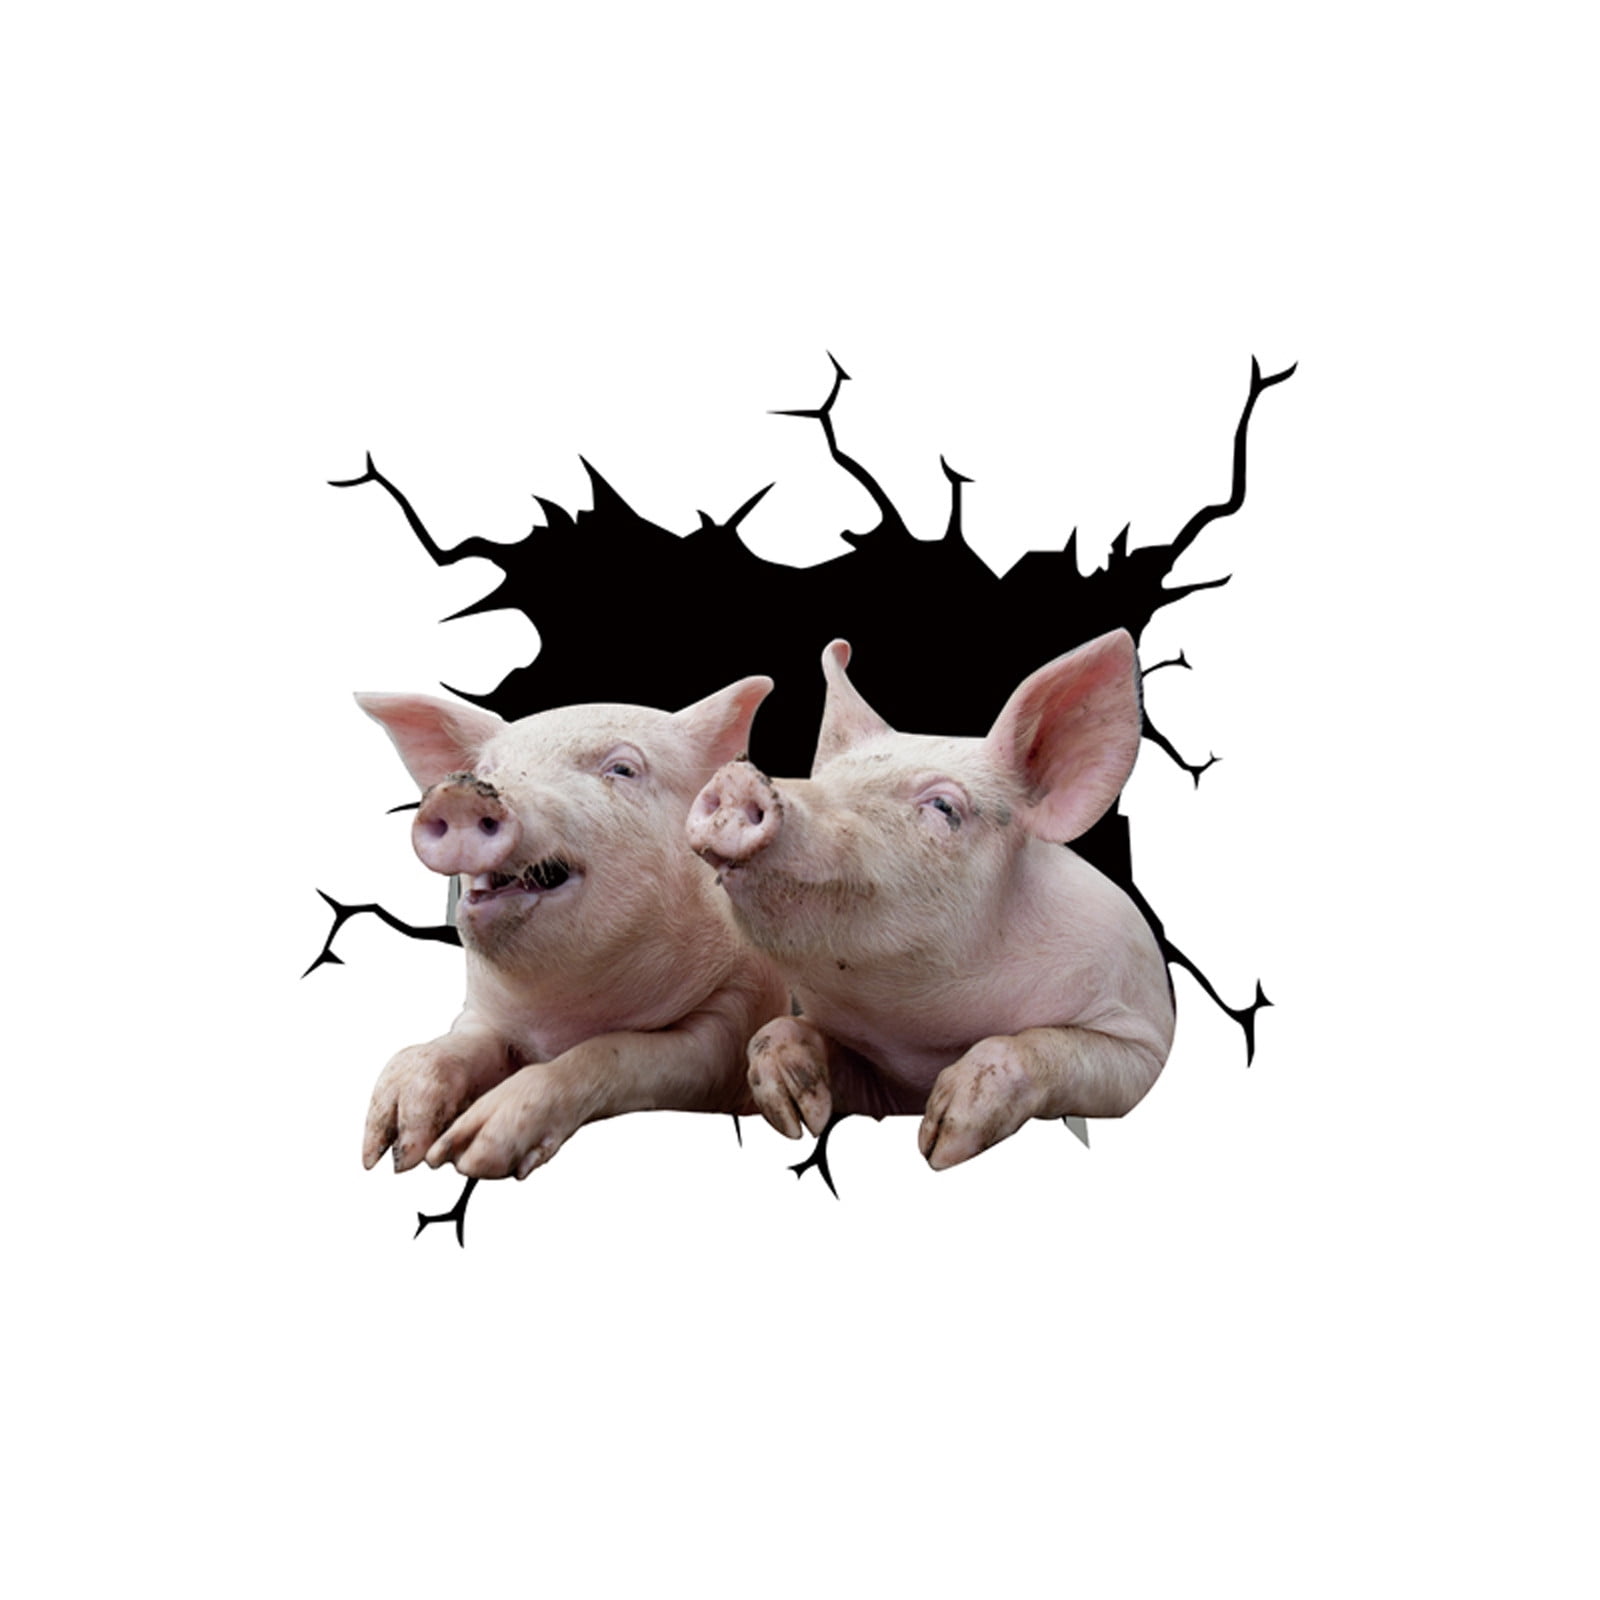 PIG Vinyl Decal Sticker Car Window Wall Bumper Sow Swine Farm Animal Funny Pet 